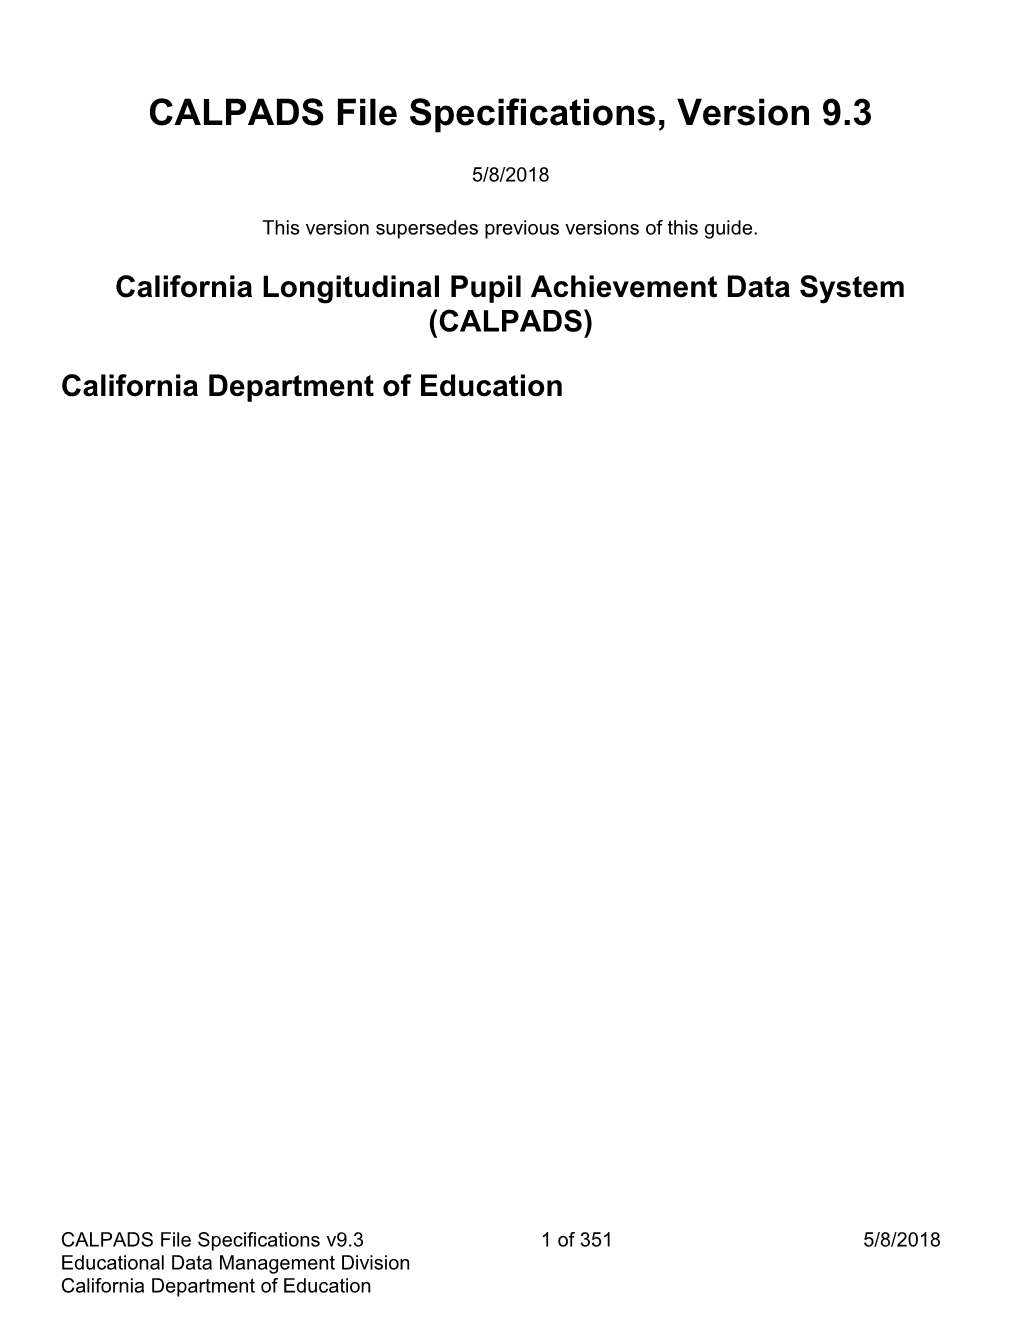 CALPADS File Specifications (CFS) V9.3 - California Longitudinal Pupil Achievement Data